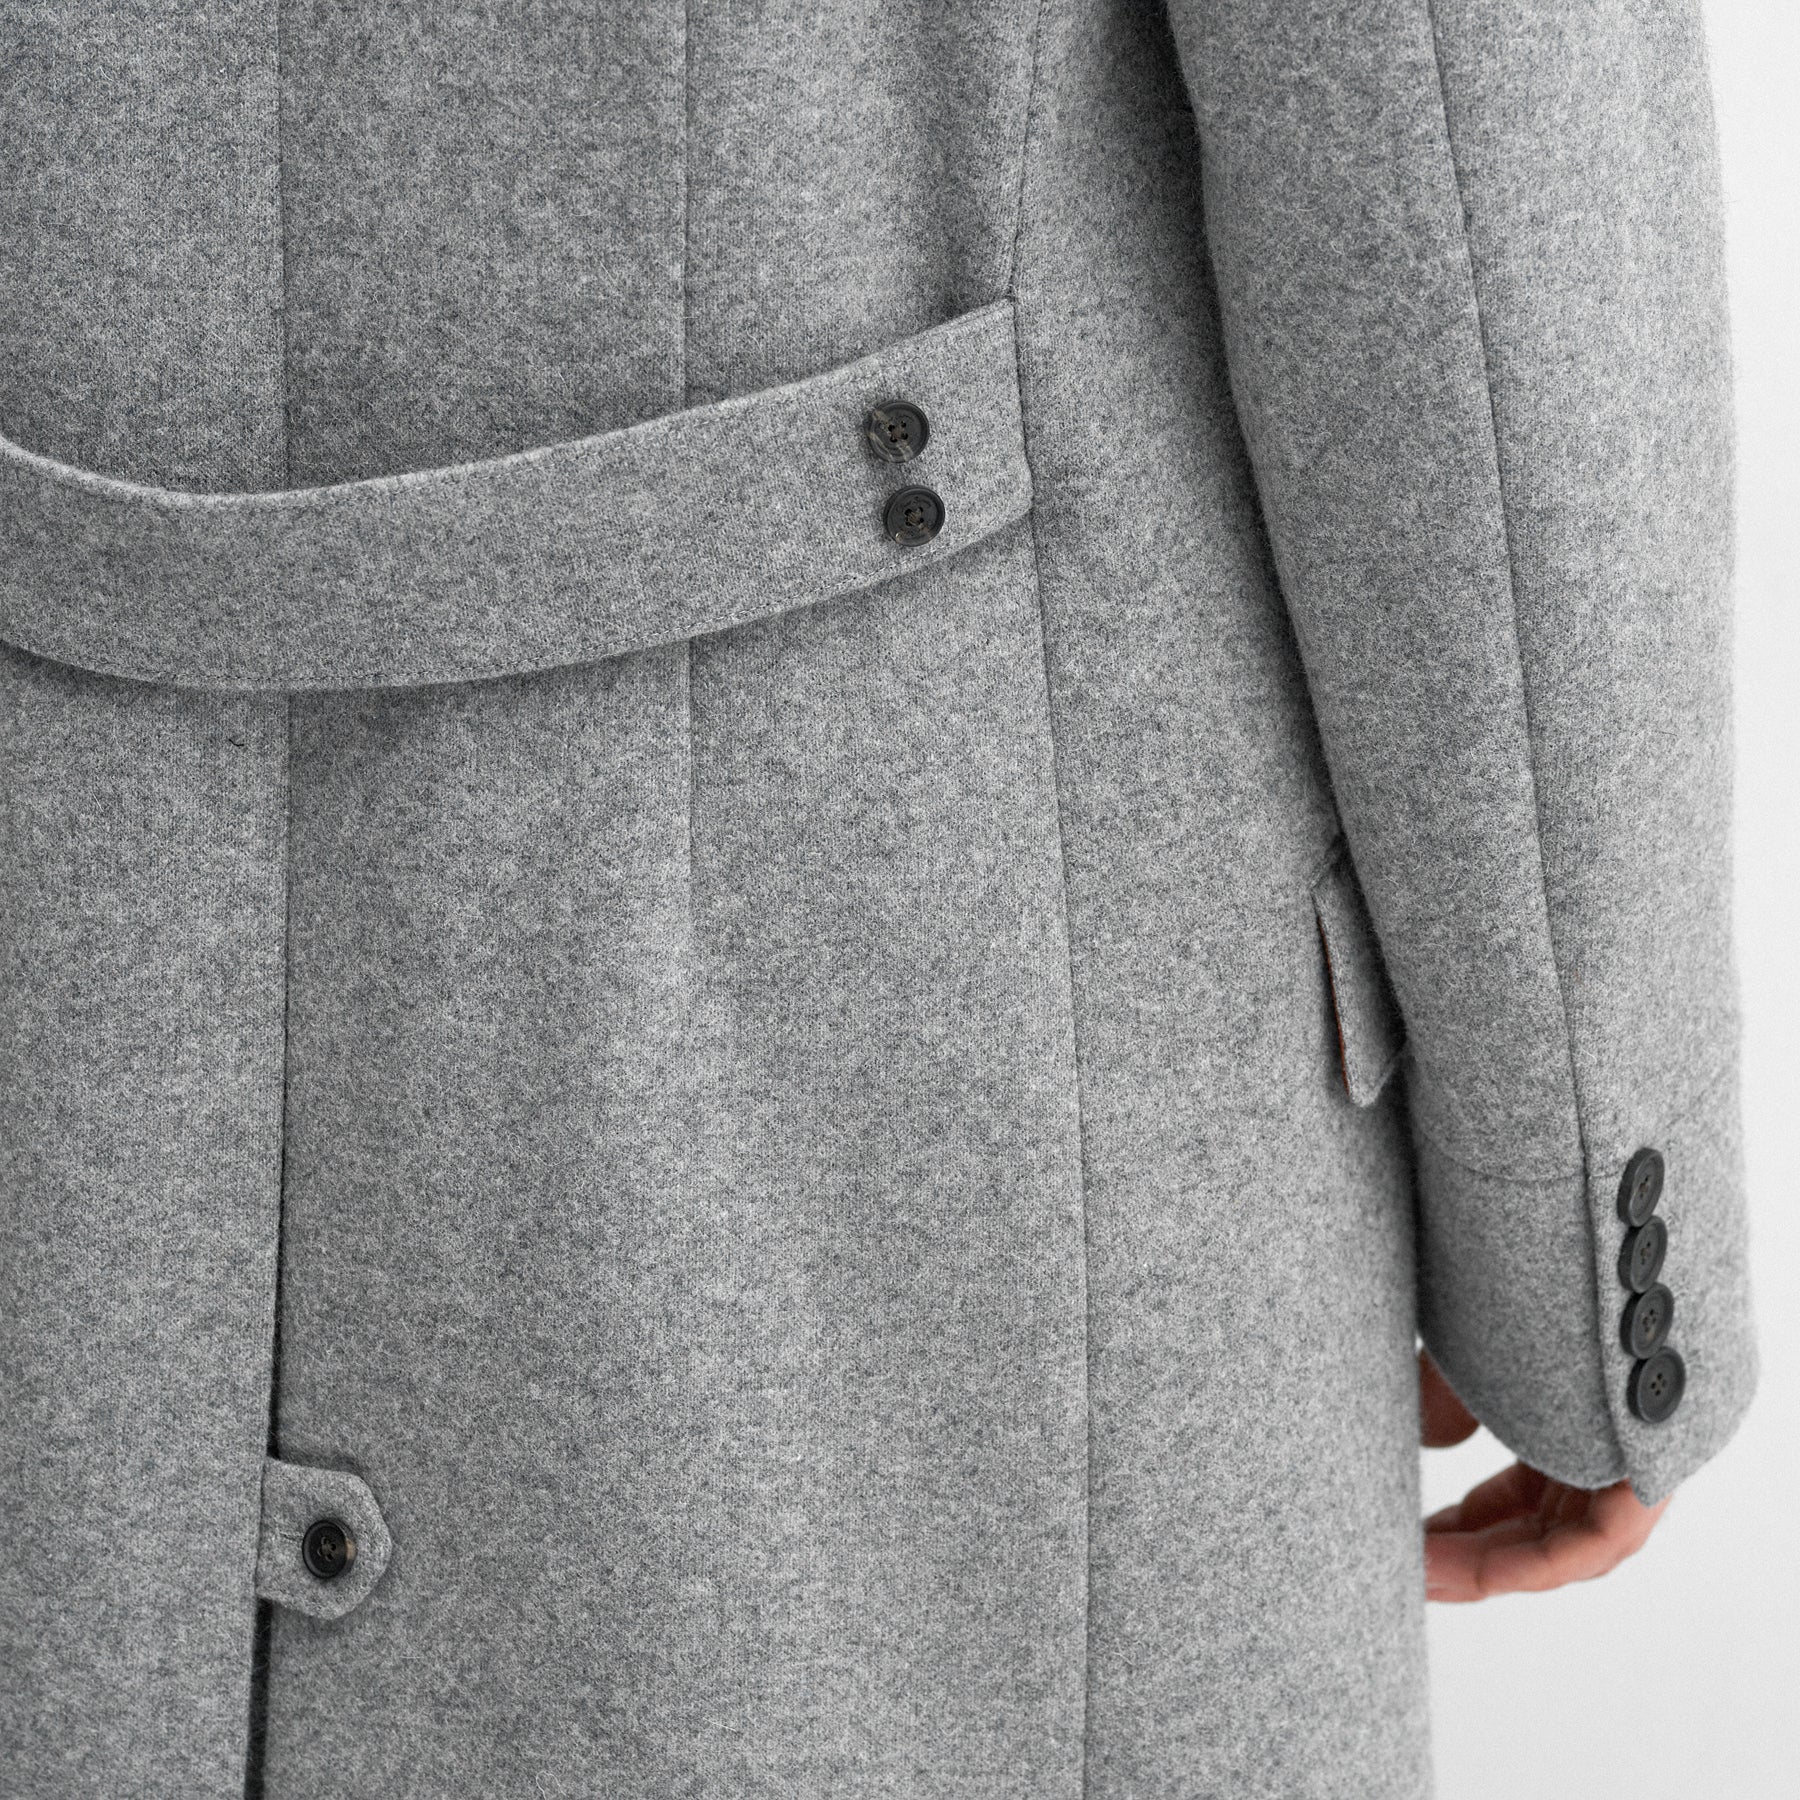 Men's grey coat